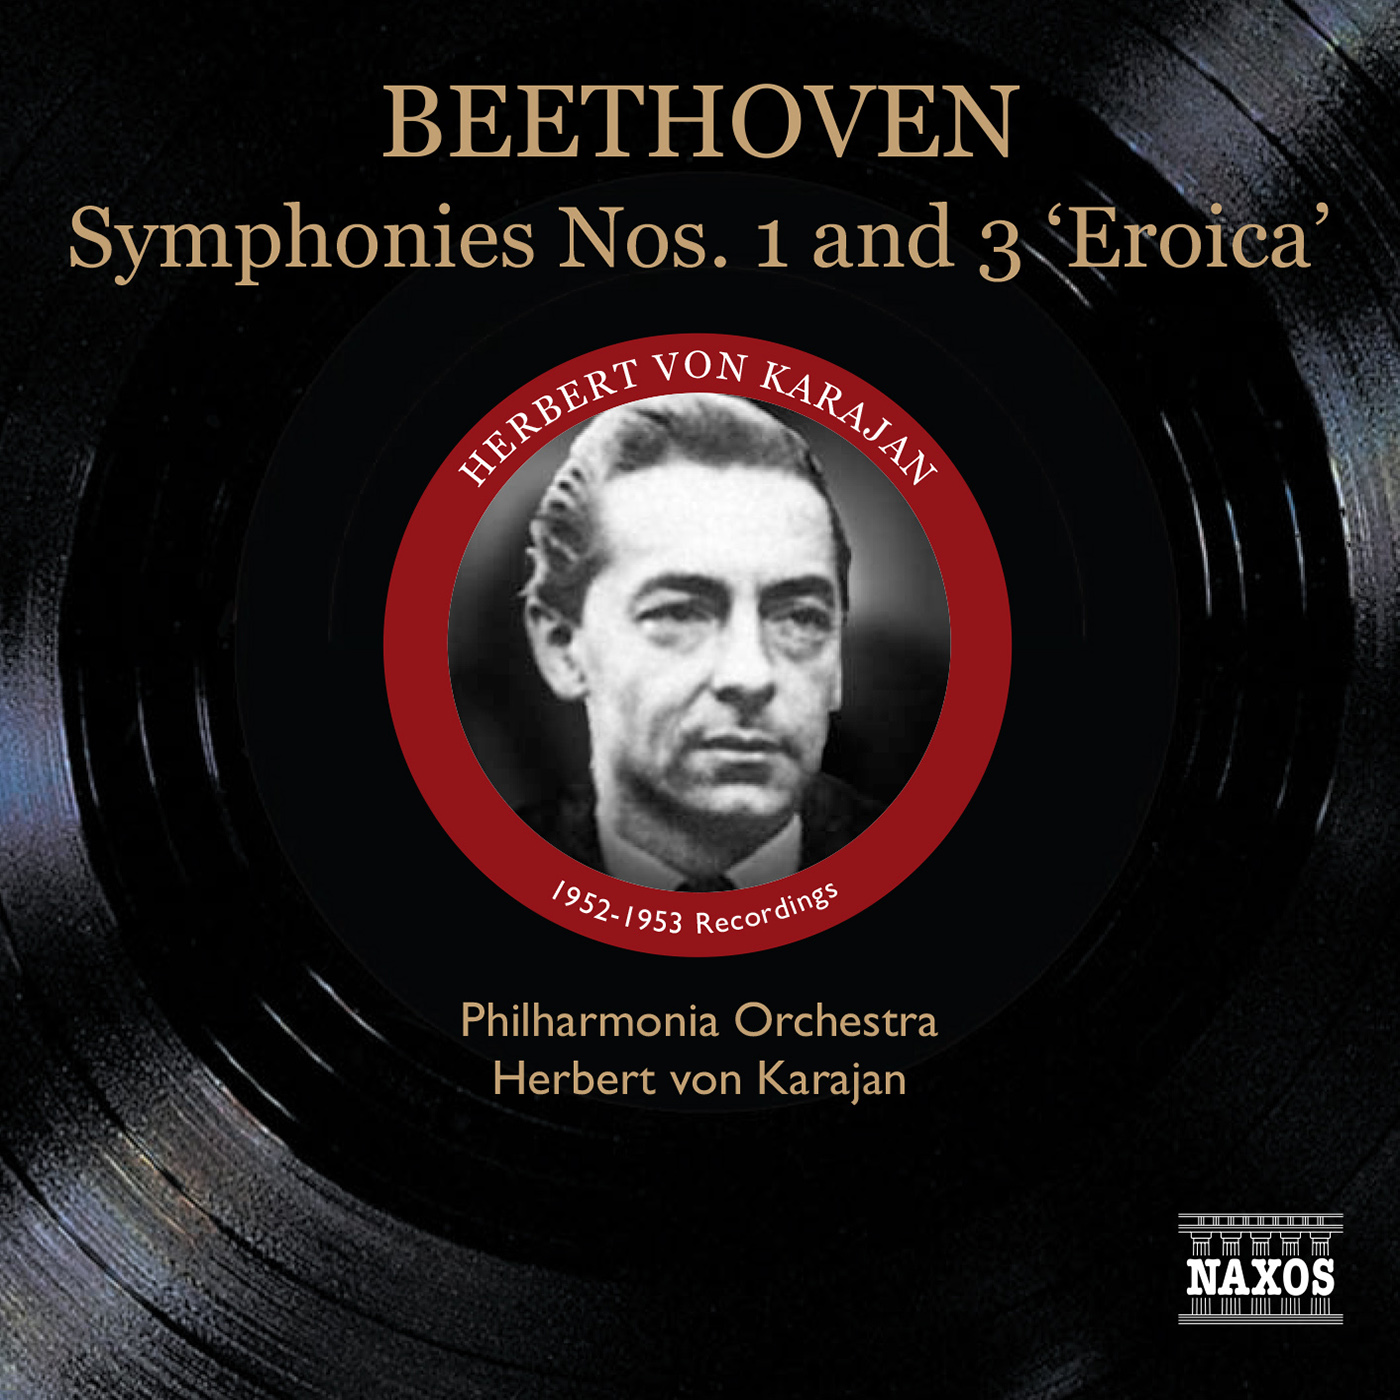 BEETHOVEN, L. van: Symphonies Nos. 1 and 3 (Karajan) (1952-1953)